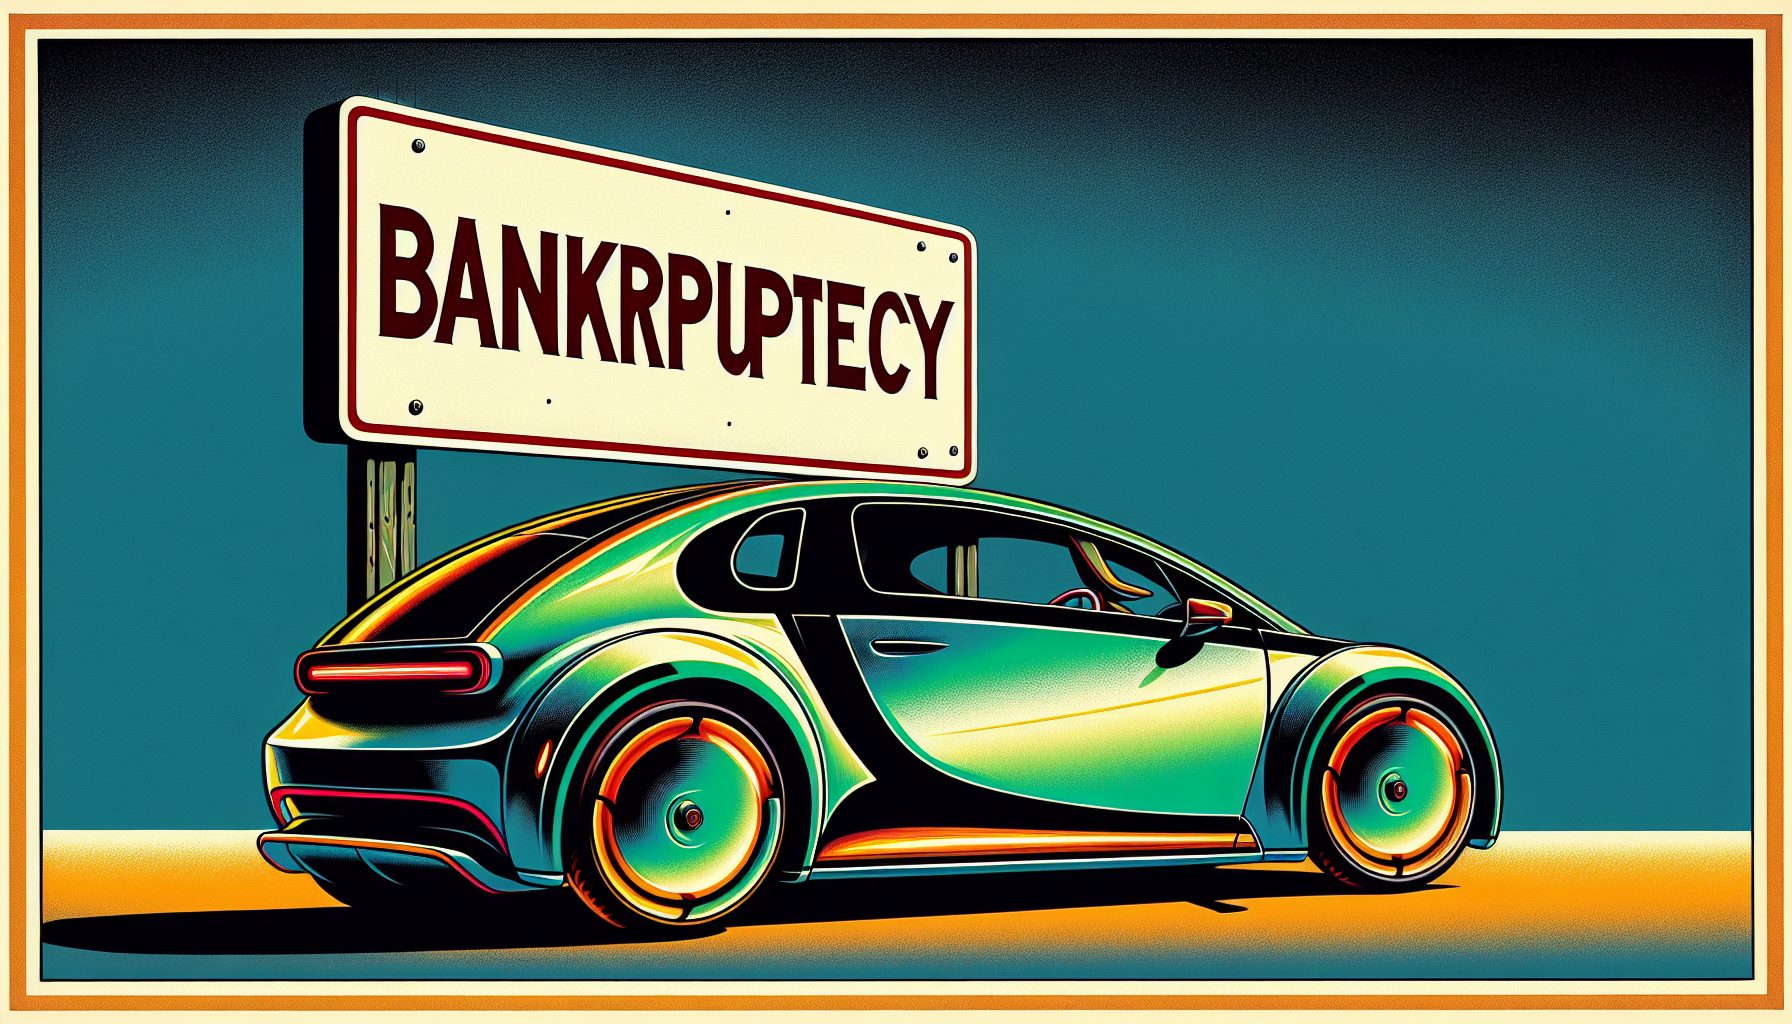 "Startup Bankruptcy"